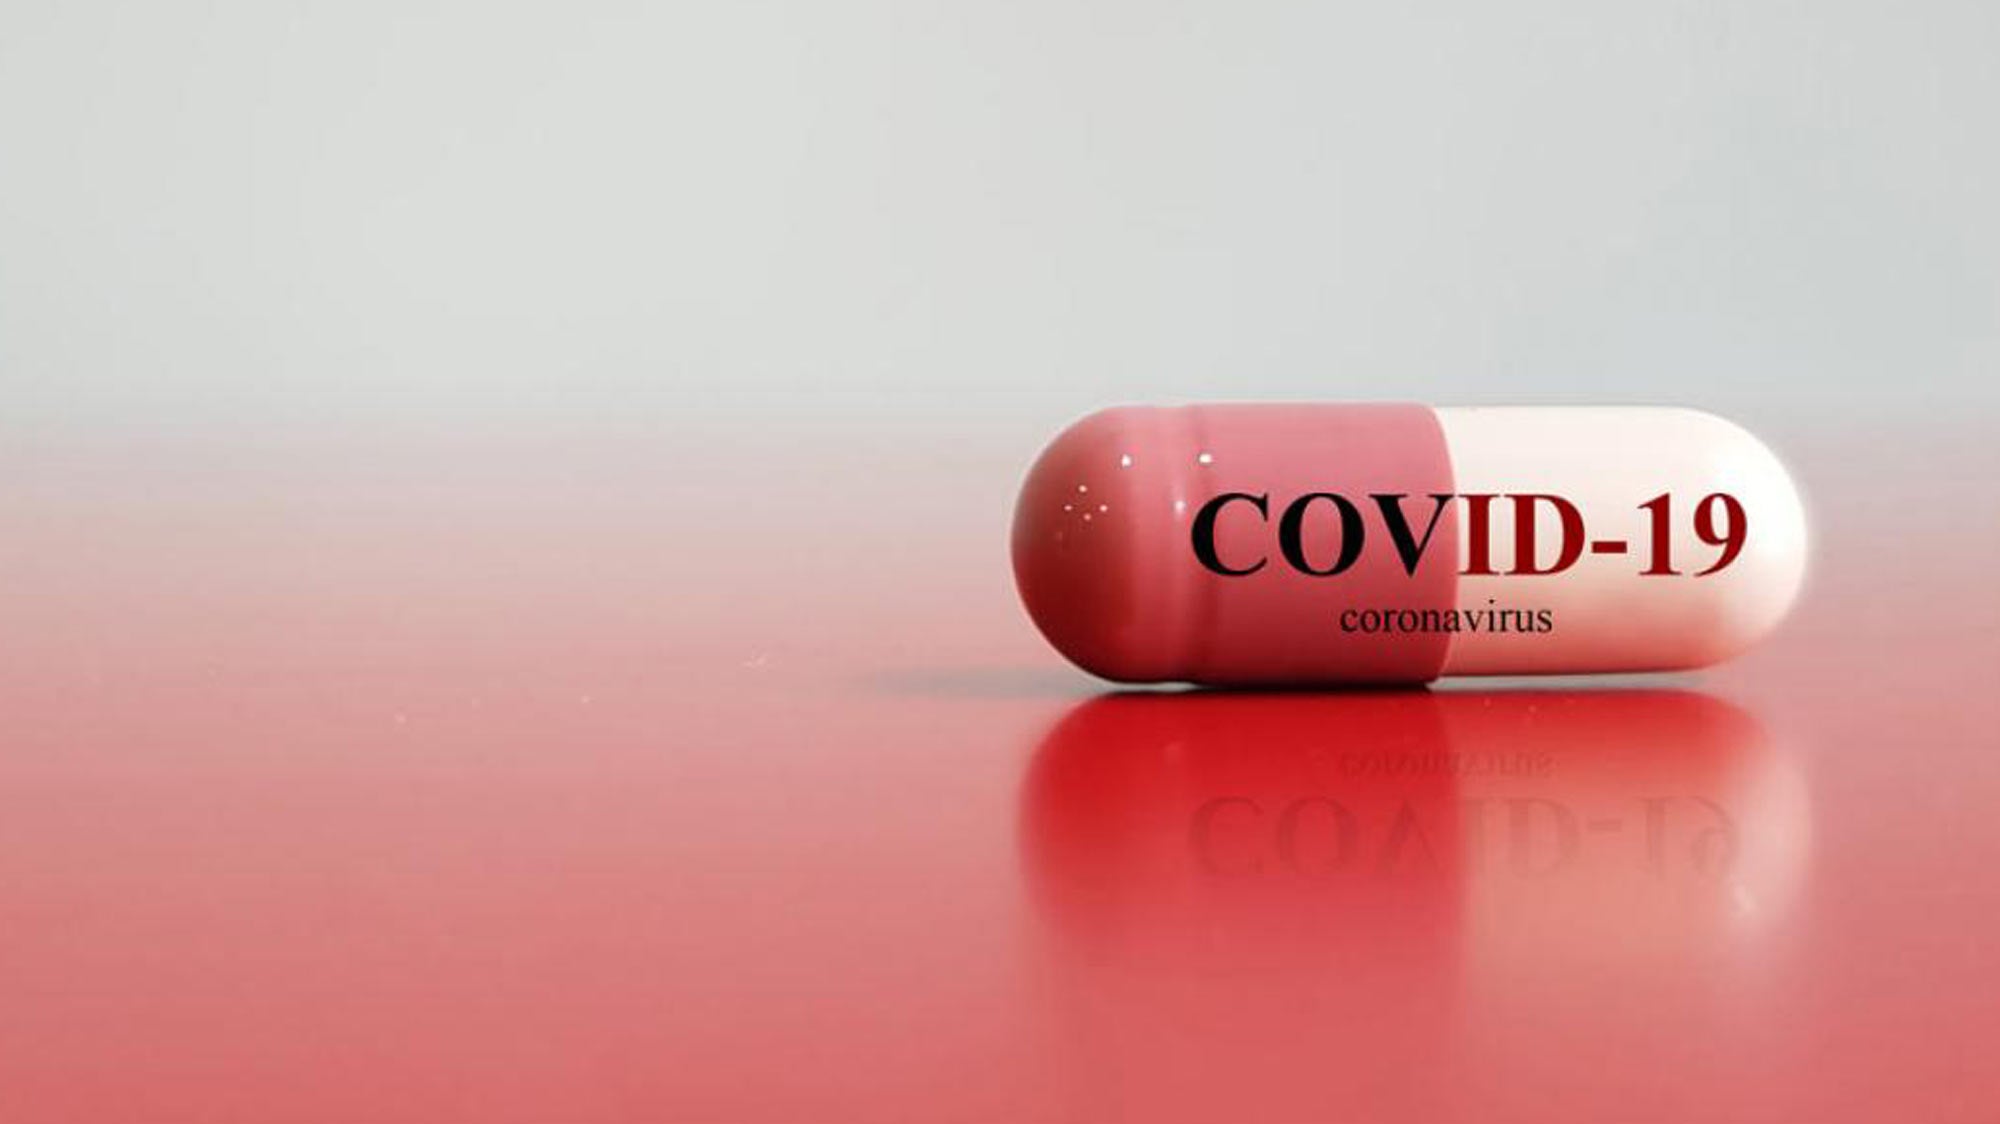 COVID-19 pill (photo illustration)